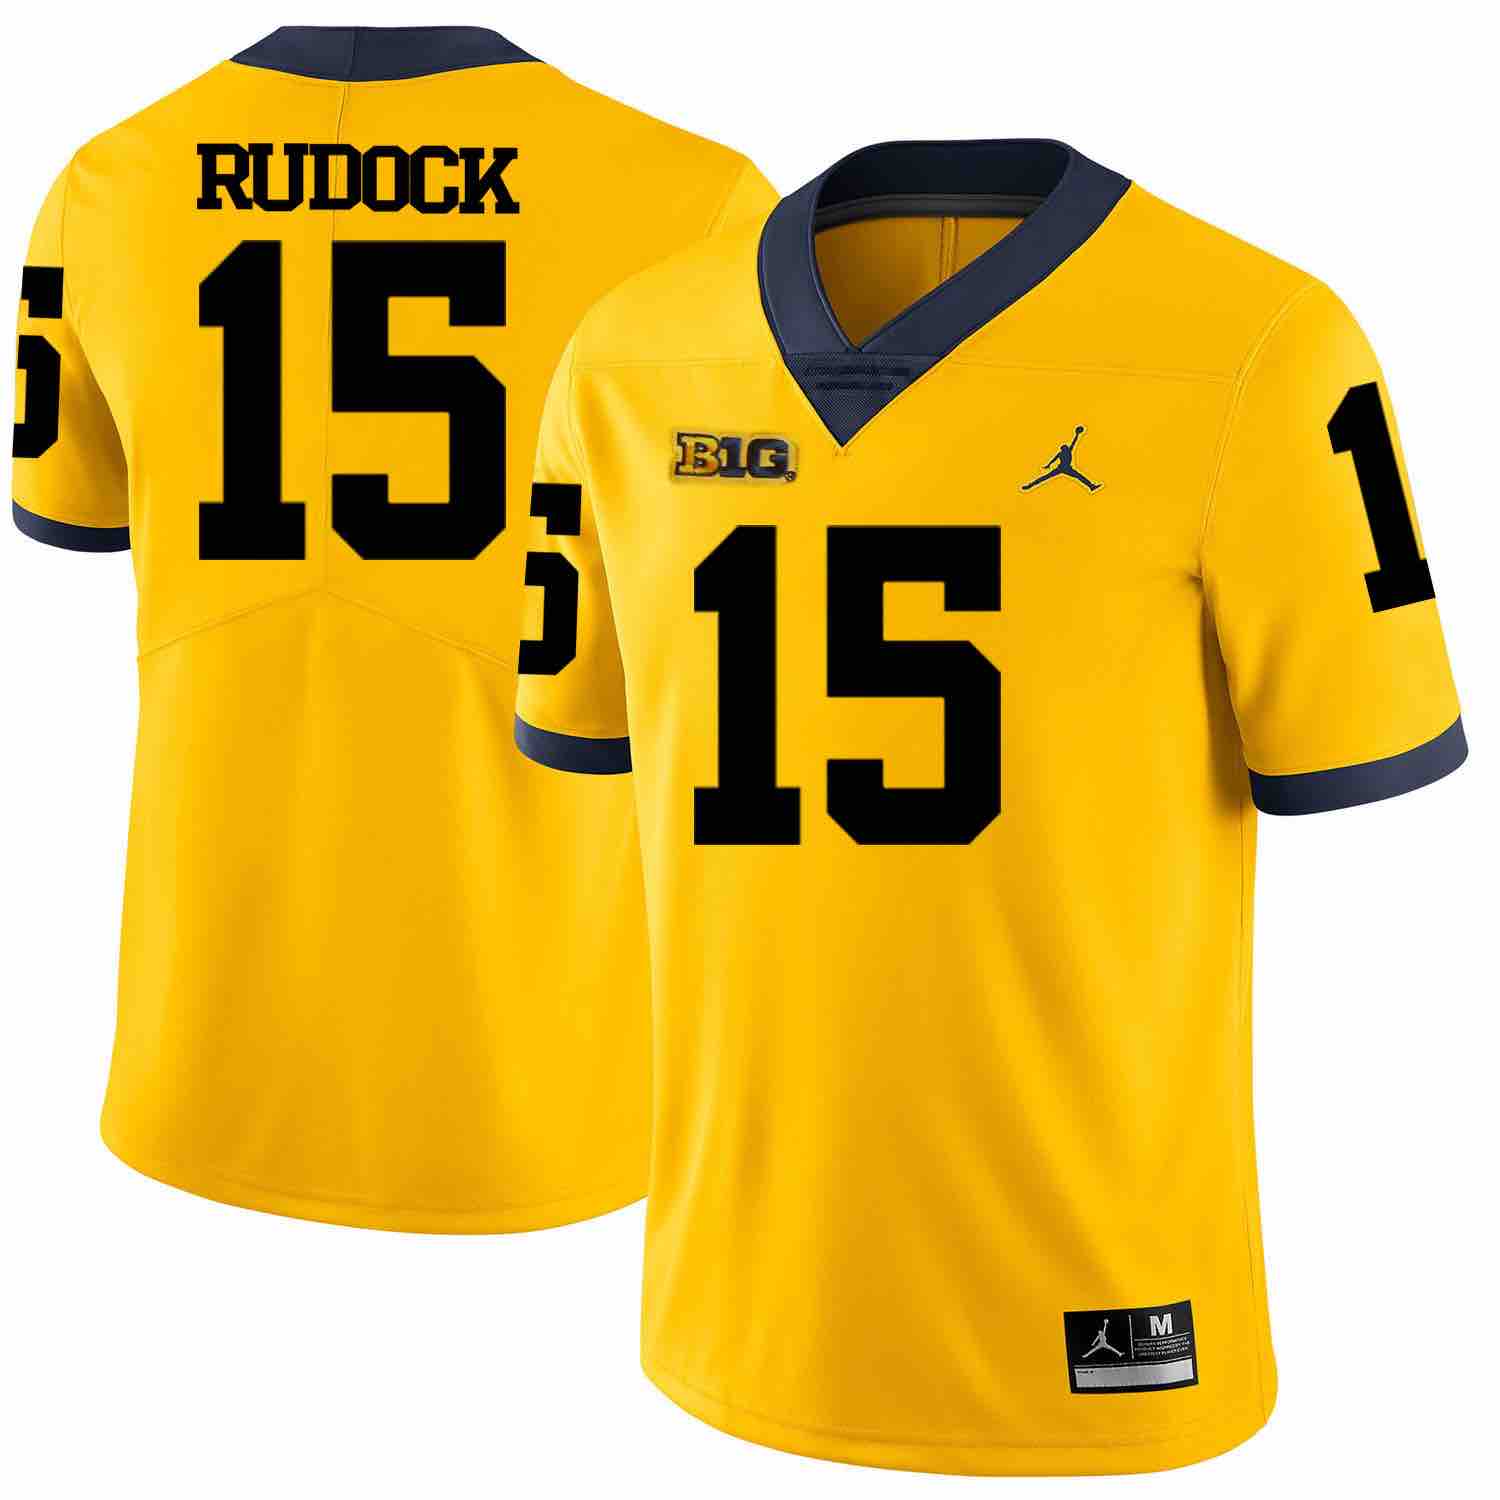 NCAA Michigan Wolverines #15 Rudock Yellow Football Jersey